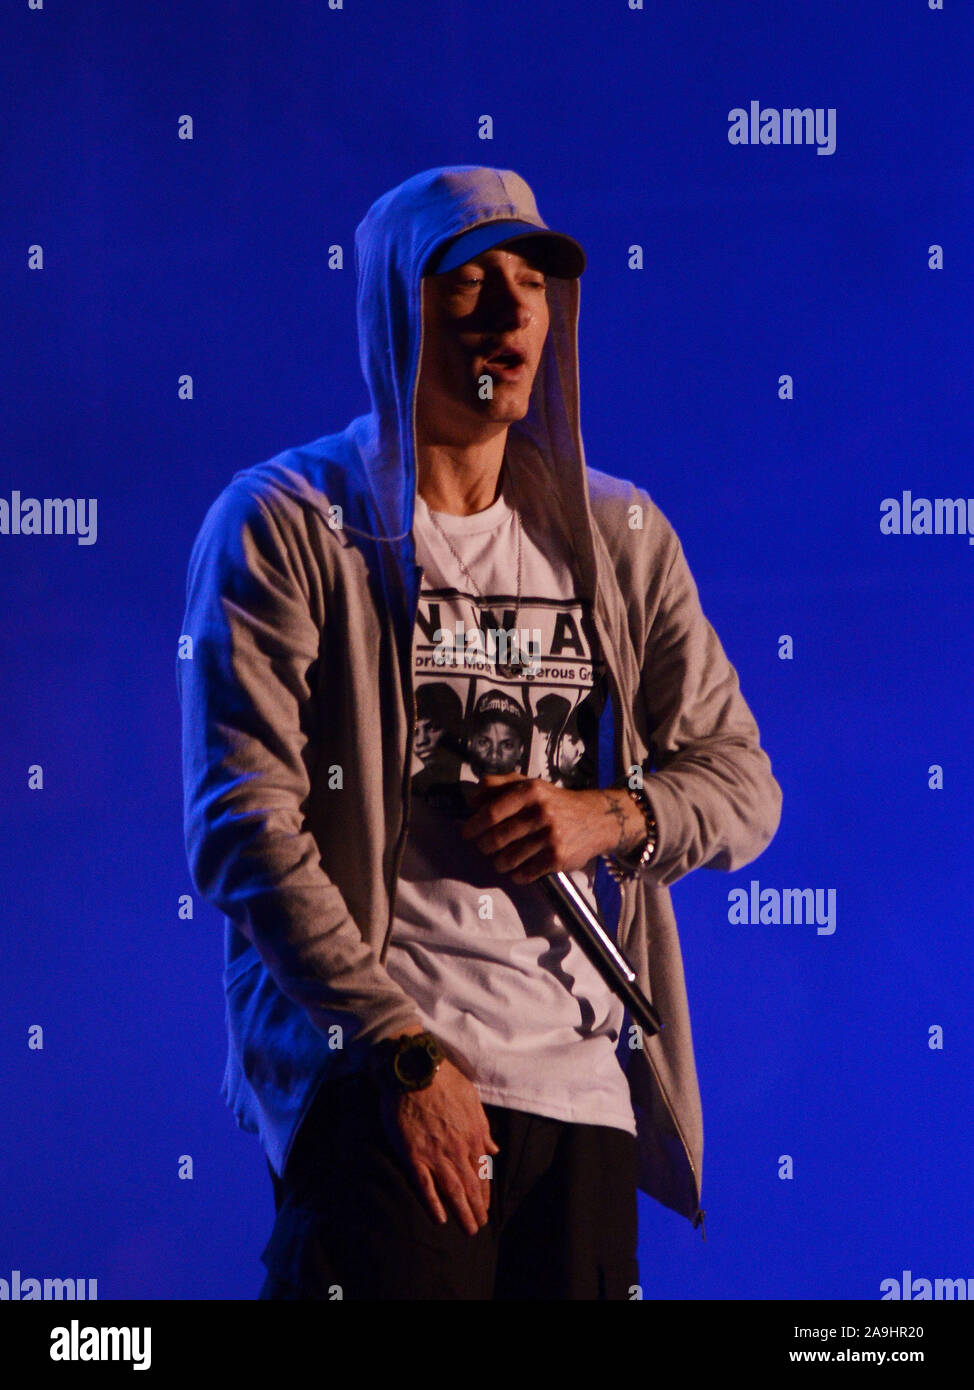 AUSTIN, TX - 11 ottobre: Eminem esegue in concerto durante la Austin City Limits Music Festival di Zilker park il 11 ottobre 2014 ad Austin, Texas. Foto: imageSPACE/MediaPunch Foto Stock